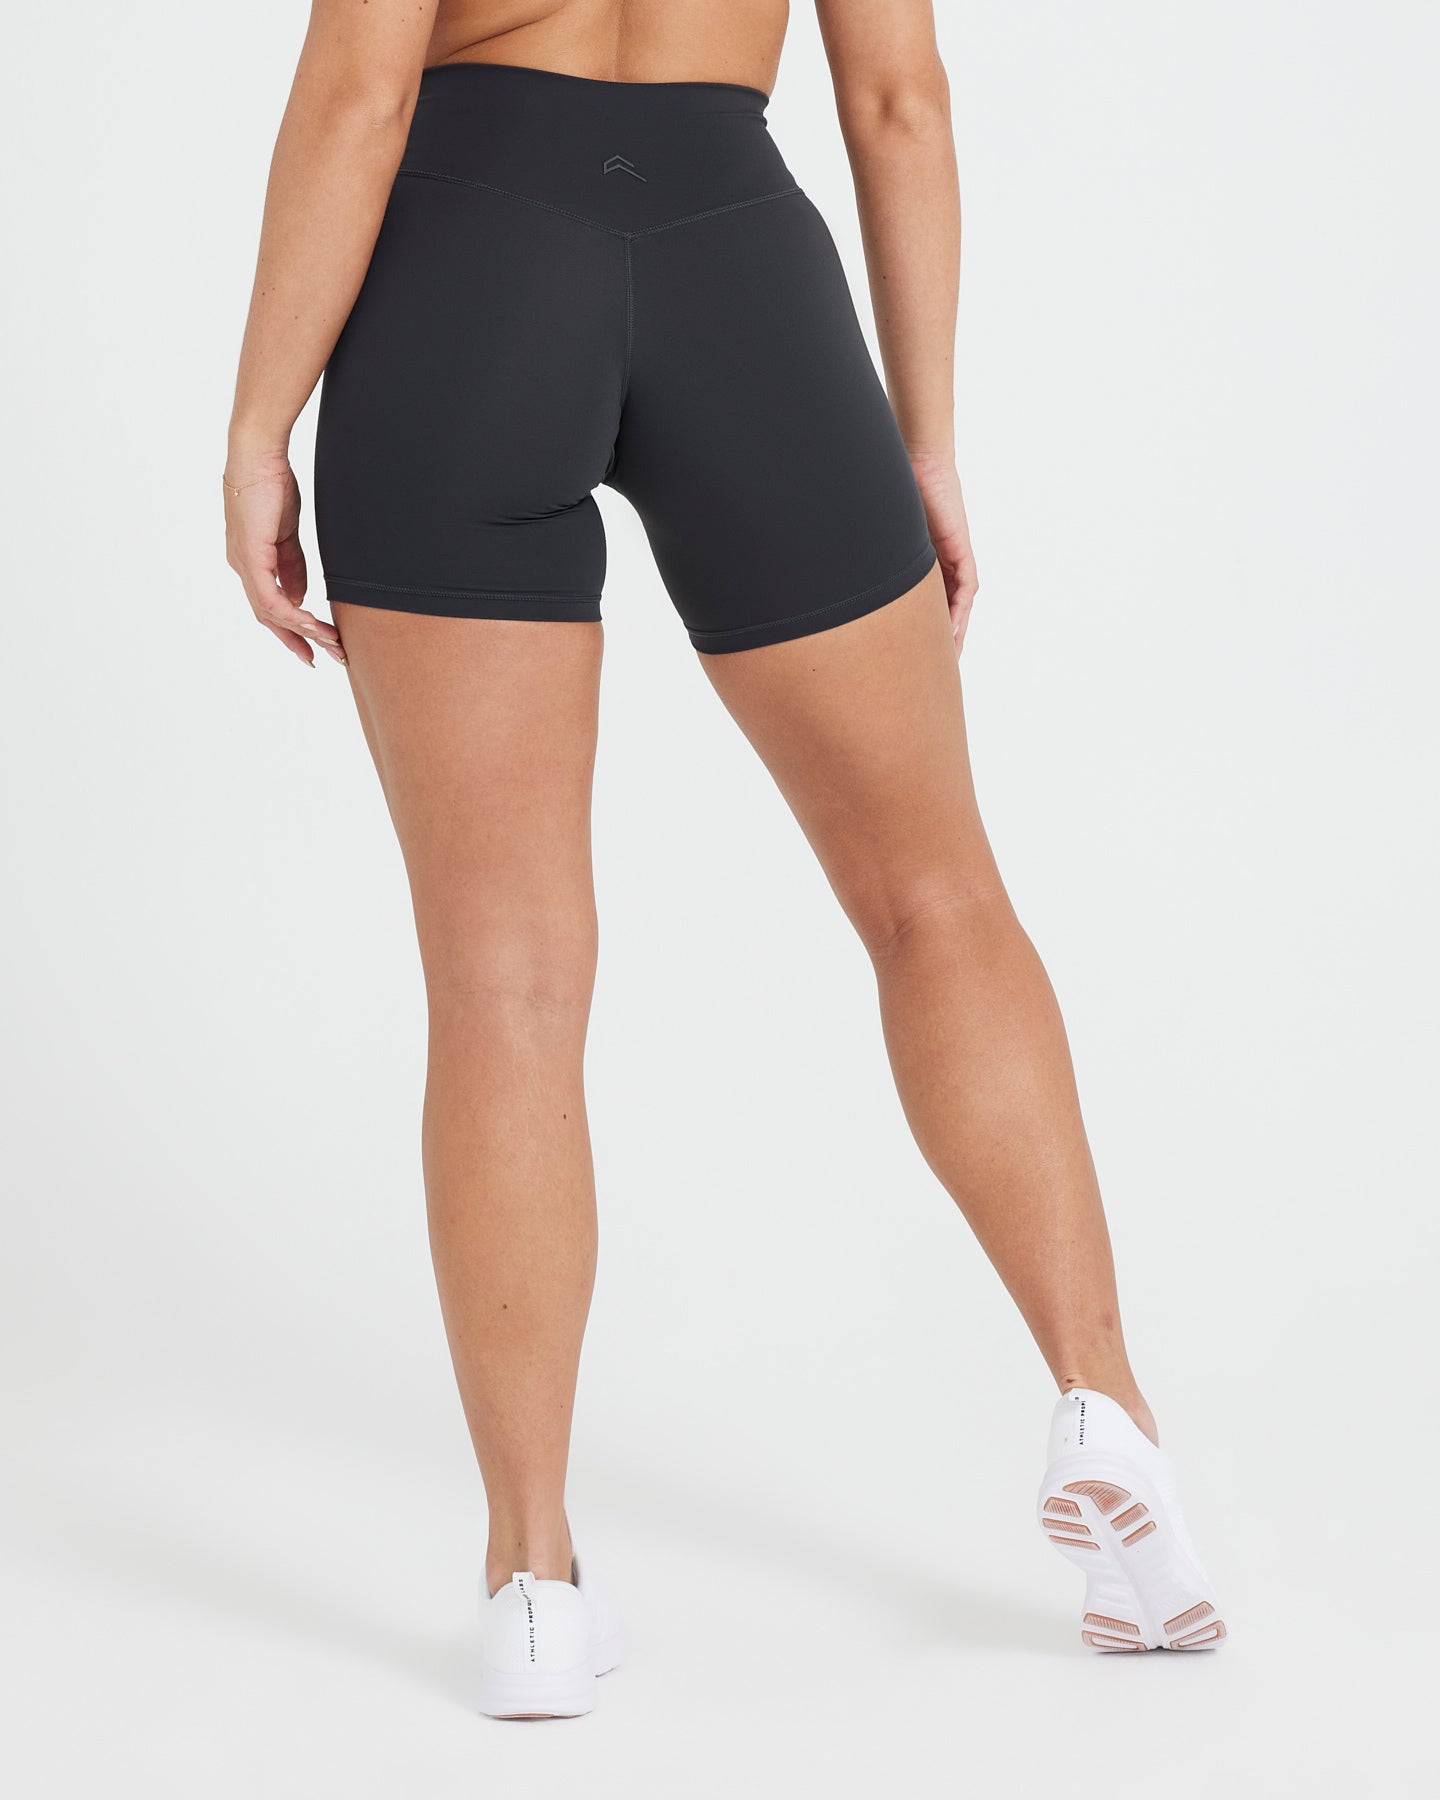 Grey Sport Shorts for Women - Mid Waist - Coal | Oner Active US